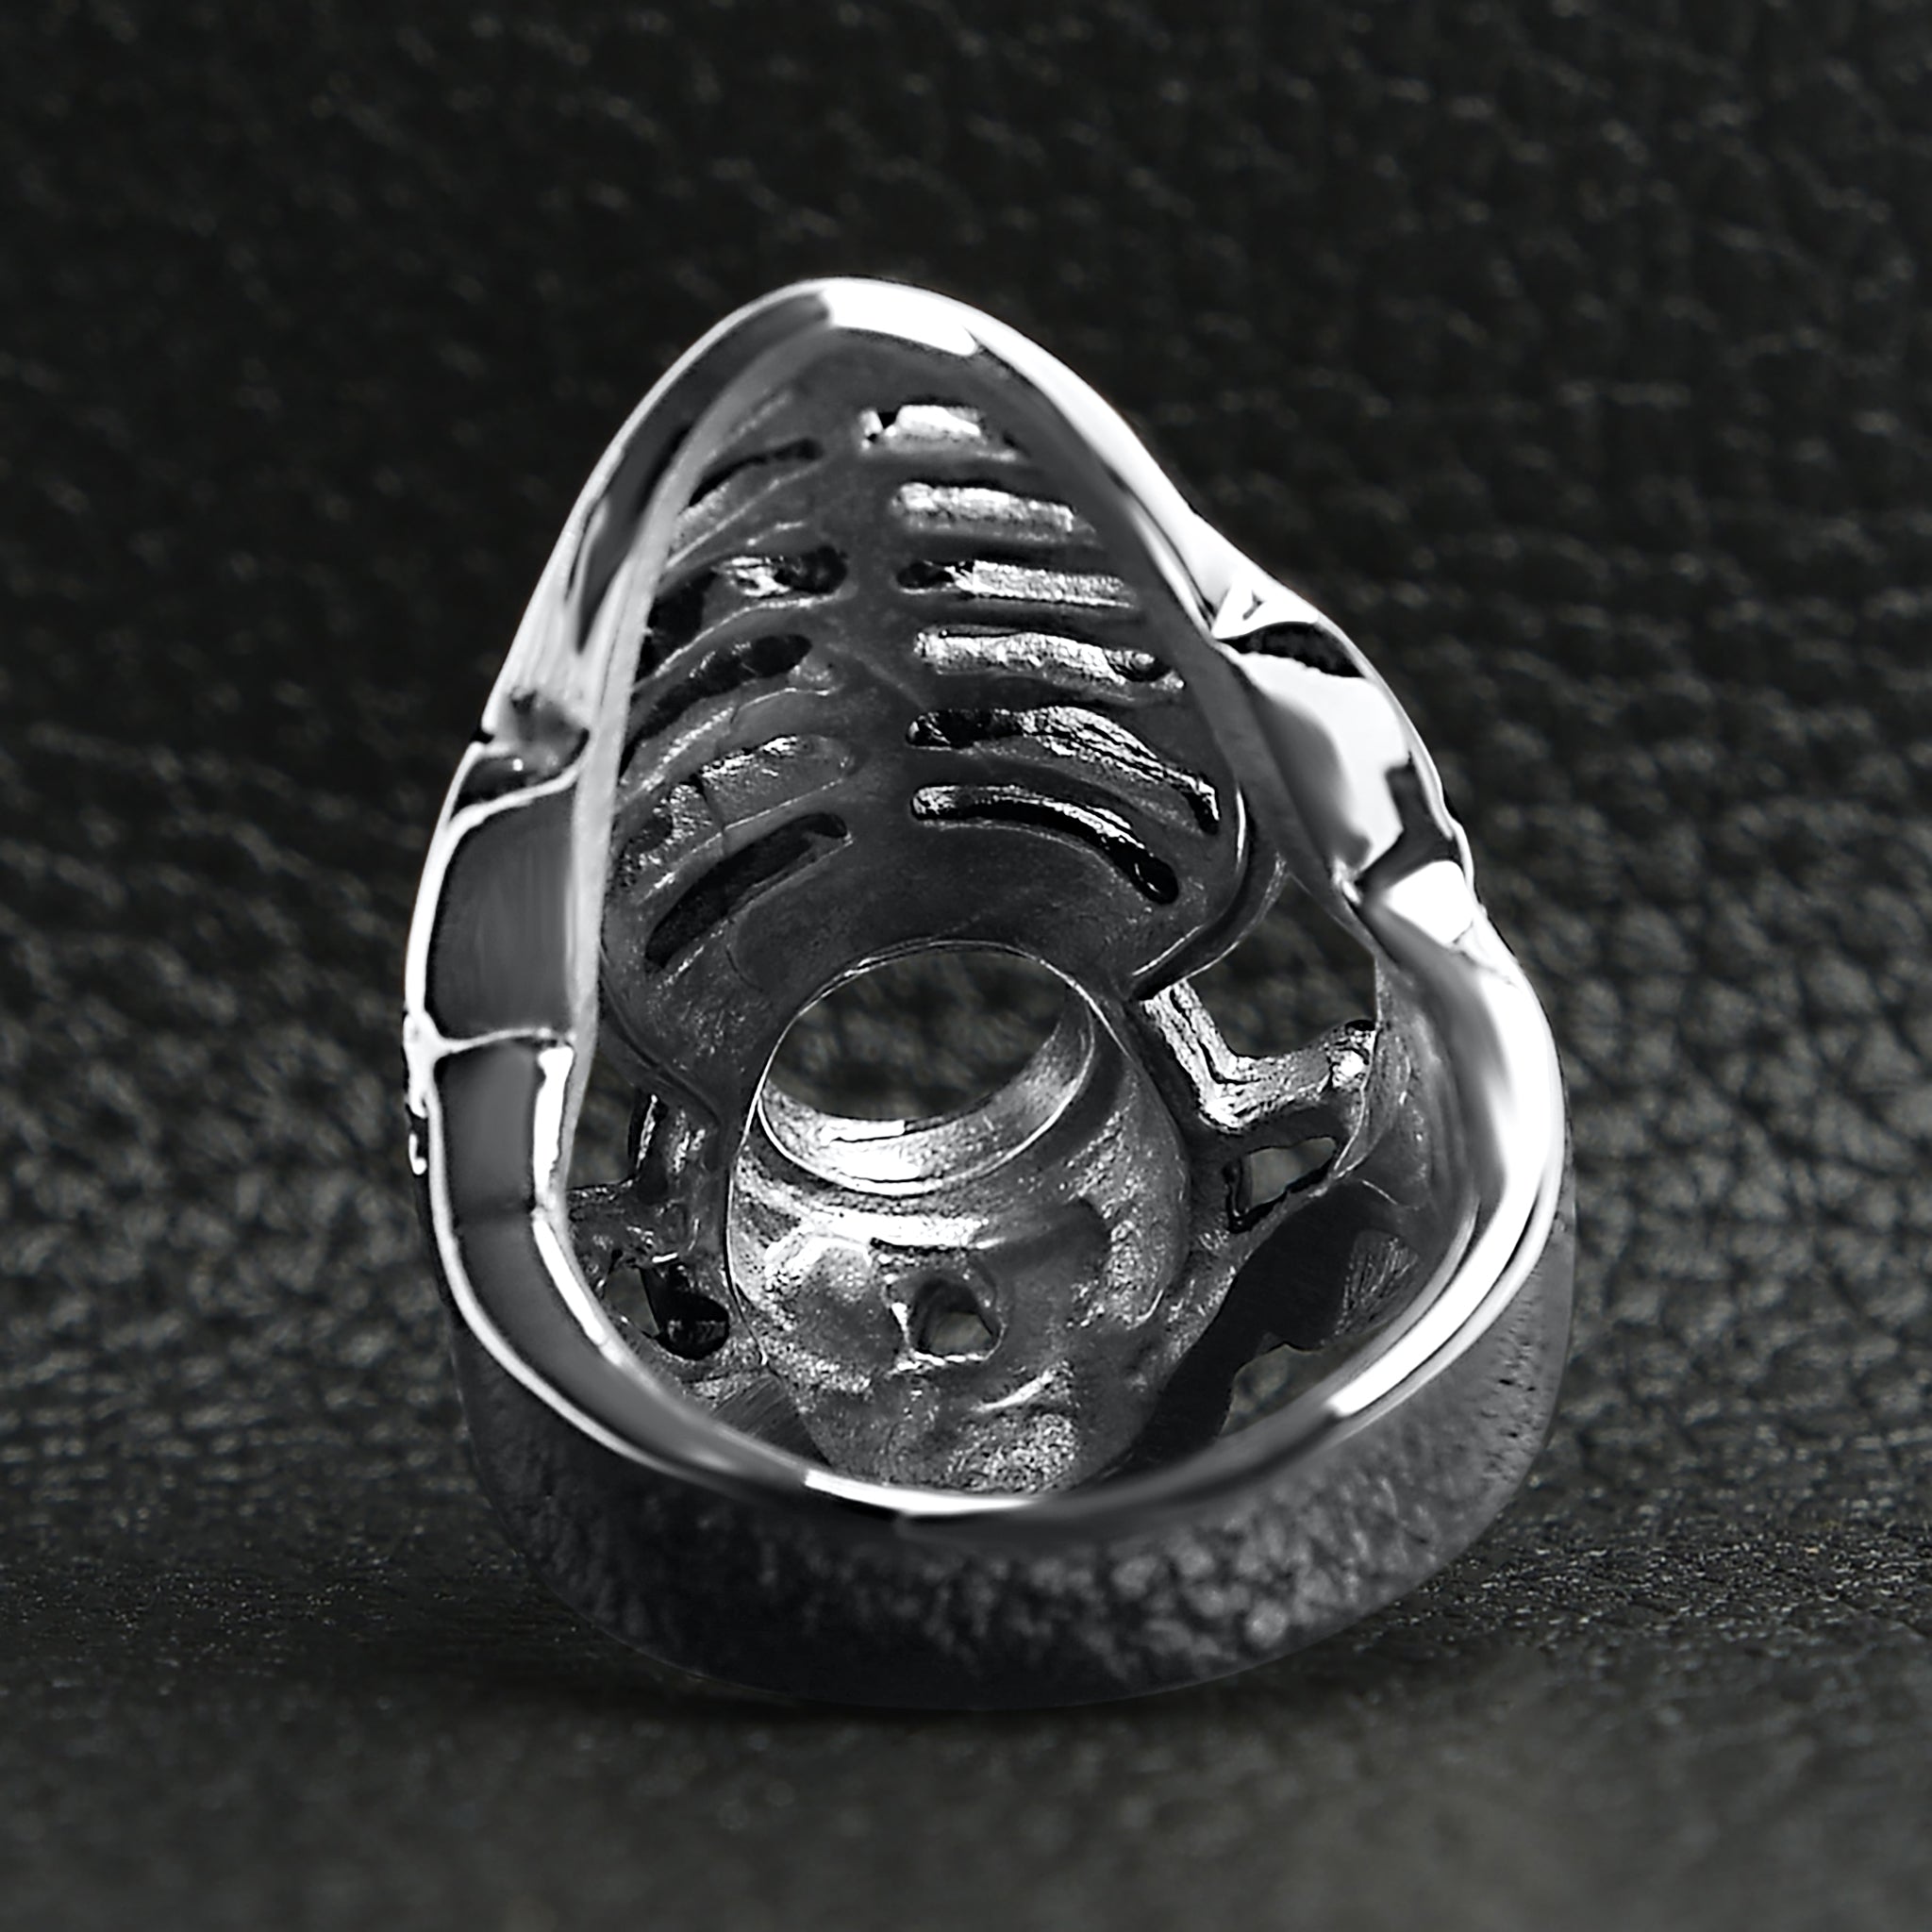 Detailed Skeleton Stainless Steel Ring - Spooky Style for Men - Hypoallergenic & Durable Bijou Her